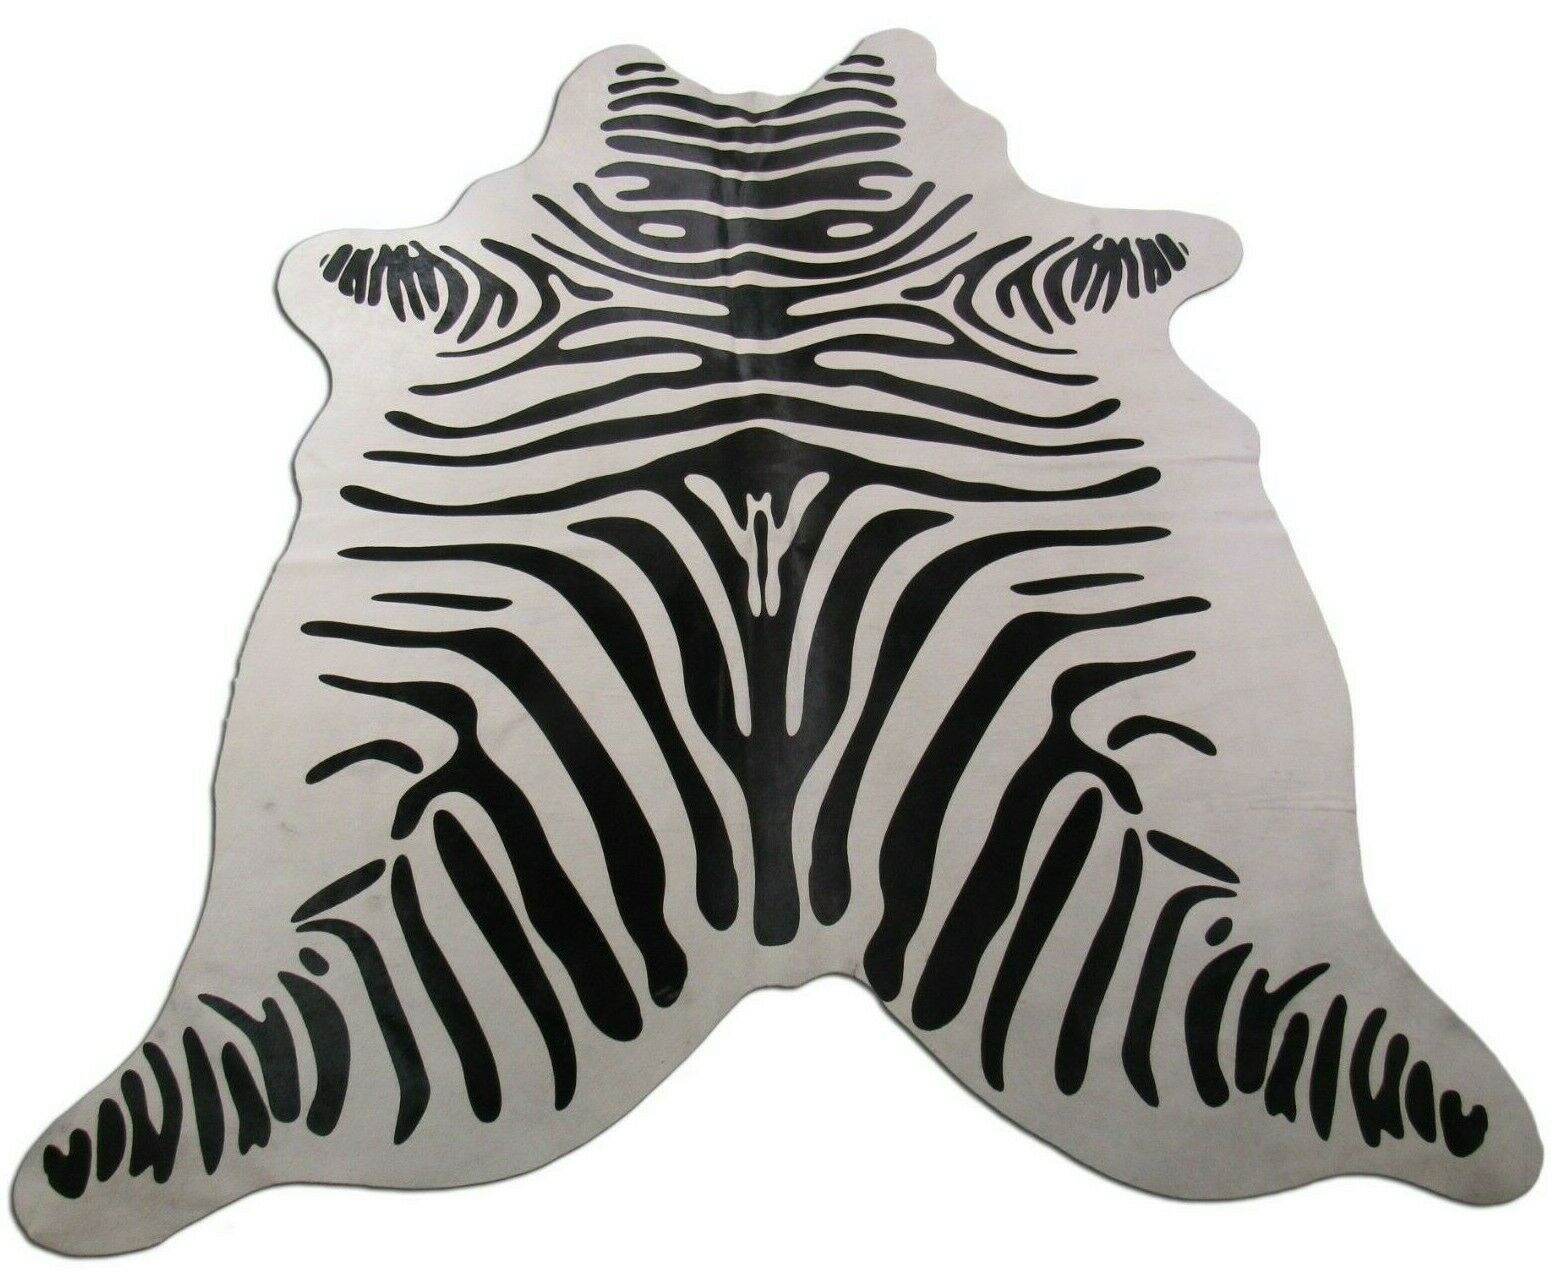 Primary image for Zebra Cowhide Rug Size: 6' X 5 1/2' Black/White Zebra Print Cow Hide Rug C-1231